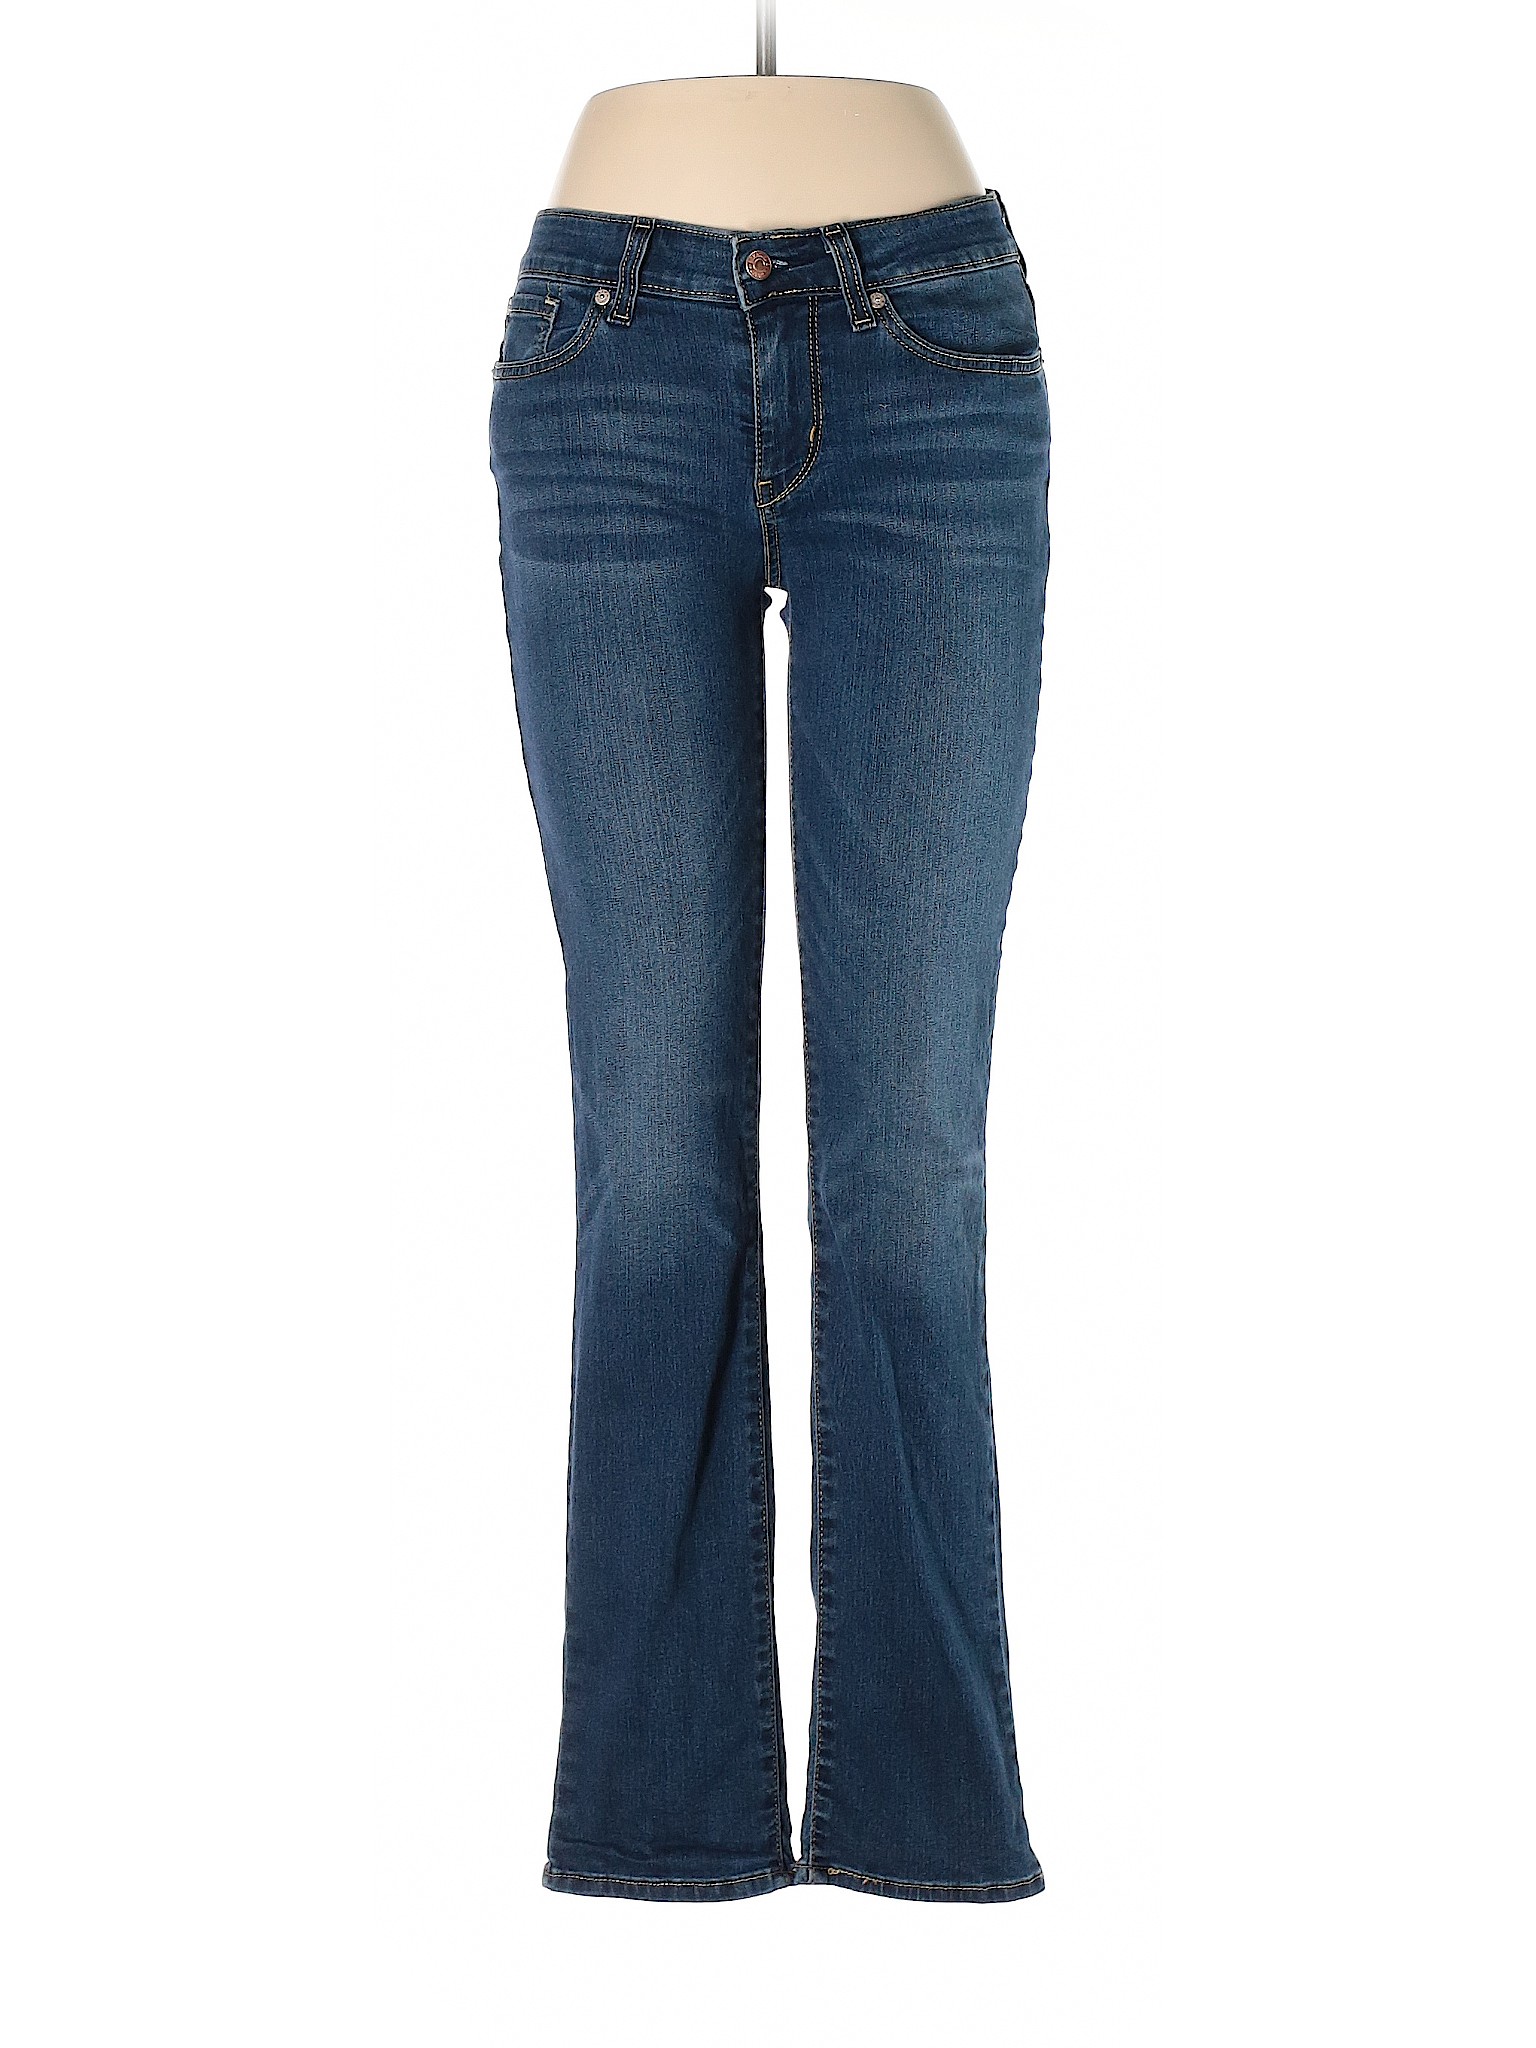 Levi Strauss Signature Women Blue Jeans 27W | eBay